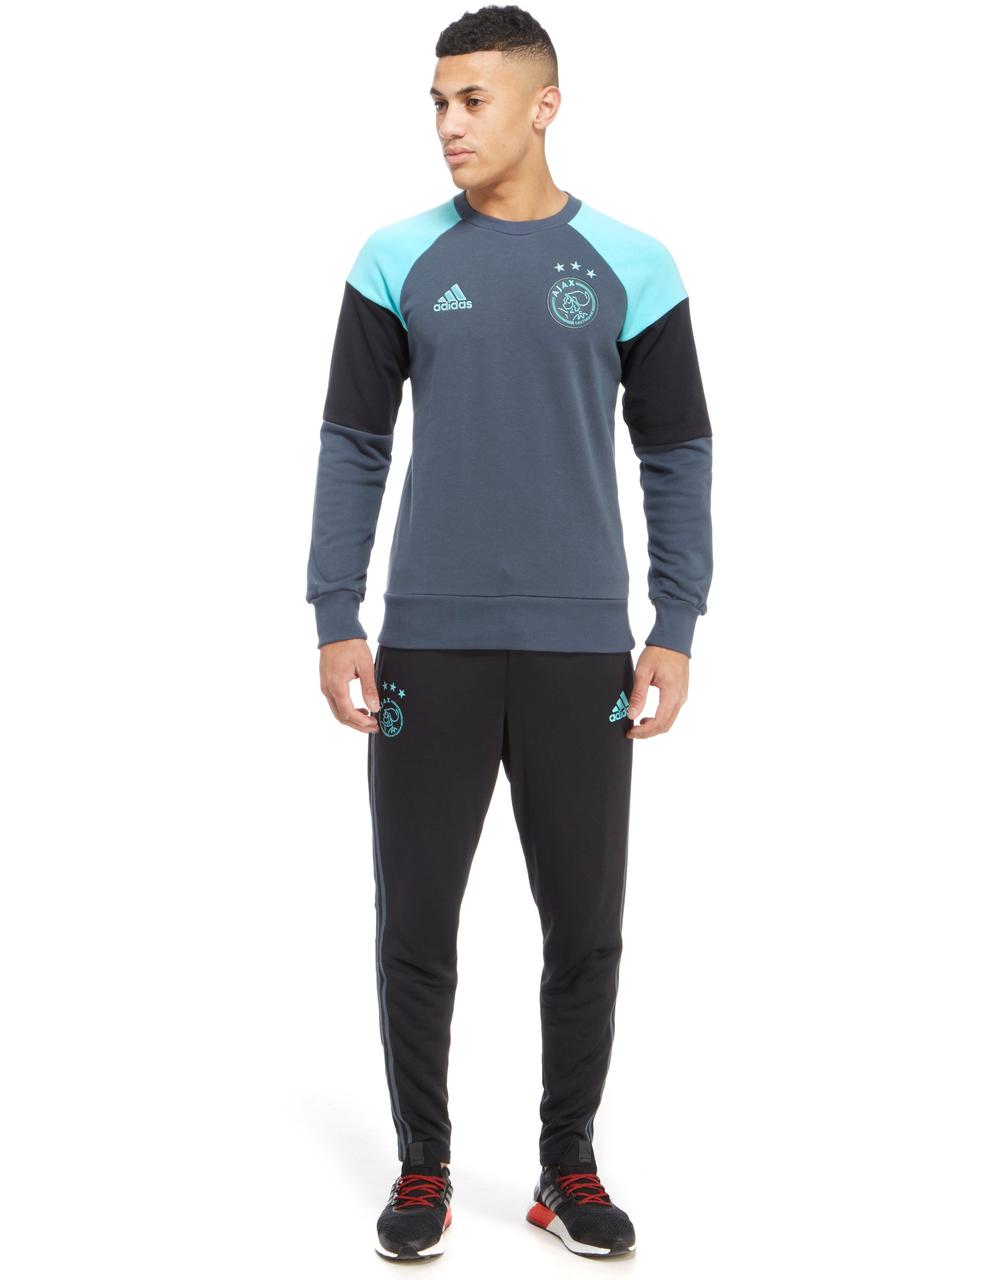 Landschap evenaar Onvervangbaar Adidas Ajax 2016/17 Sweatshirt Top - Black / Bold Onix / Clear Aqua -  Football Shirt Culture - Latest Football Kit News and More